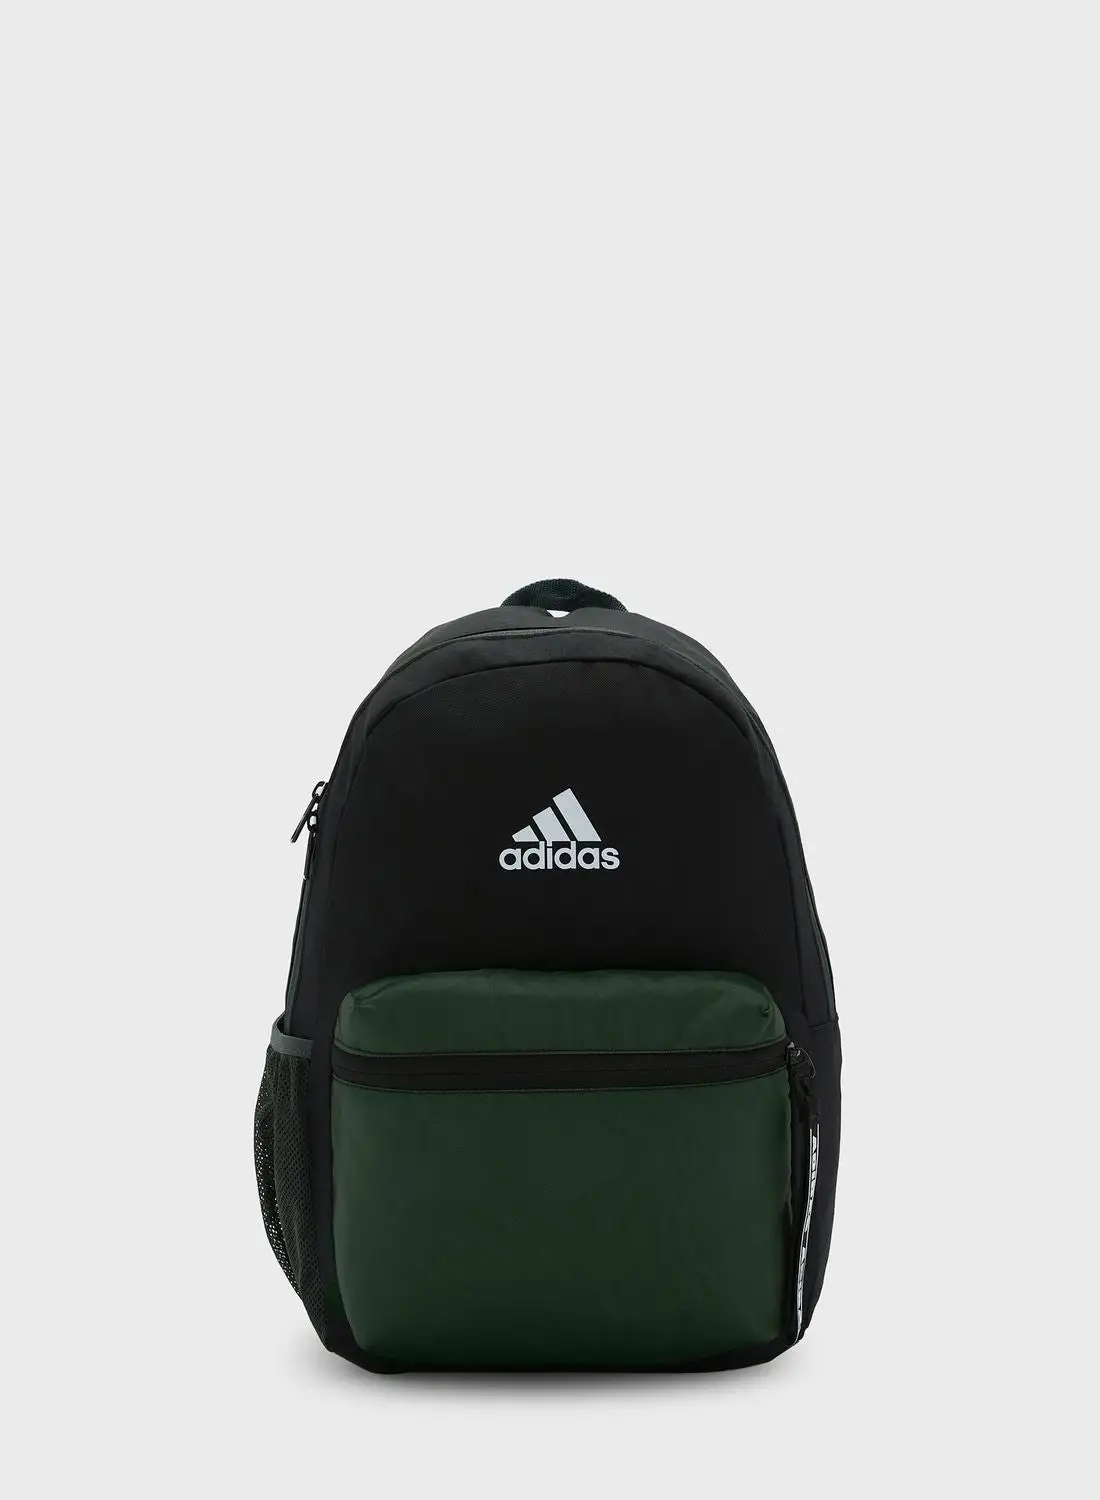 Adidas Dance Backpack